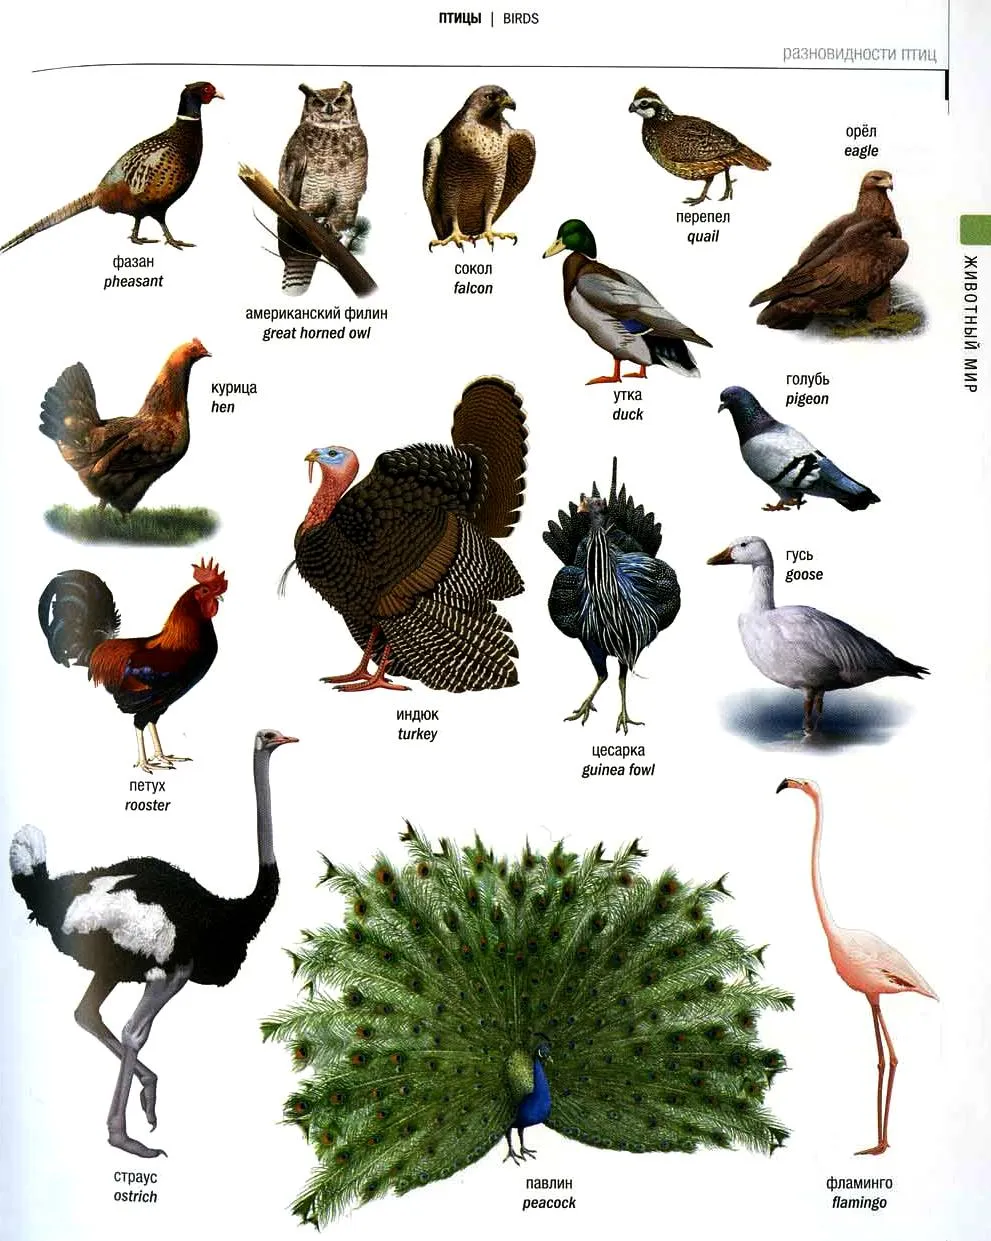 Породы птиц русская. Какие породы птиц есть. Виды птиц на французском. Породы птиц ньюгенша.